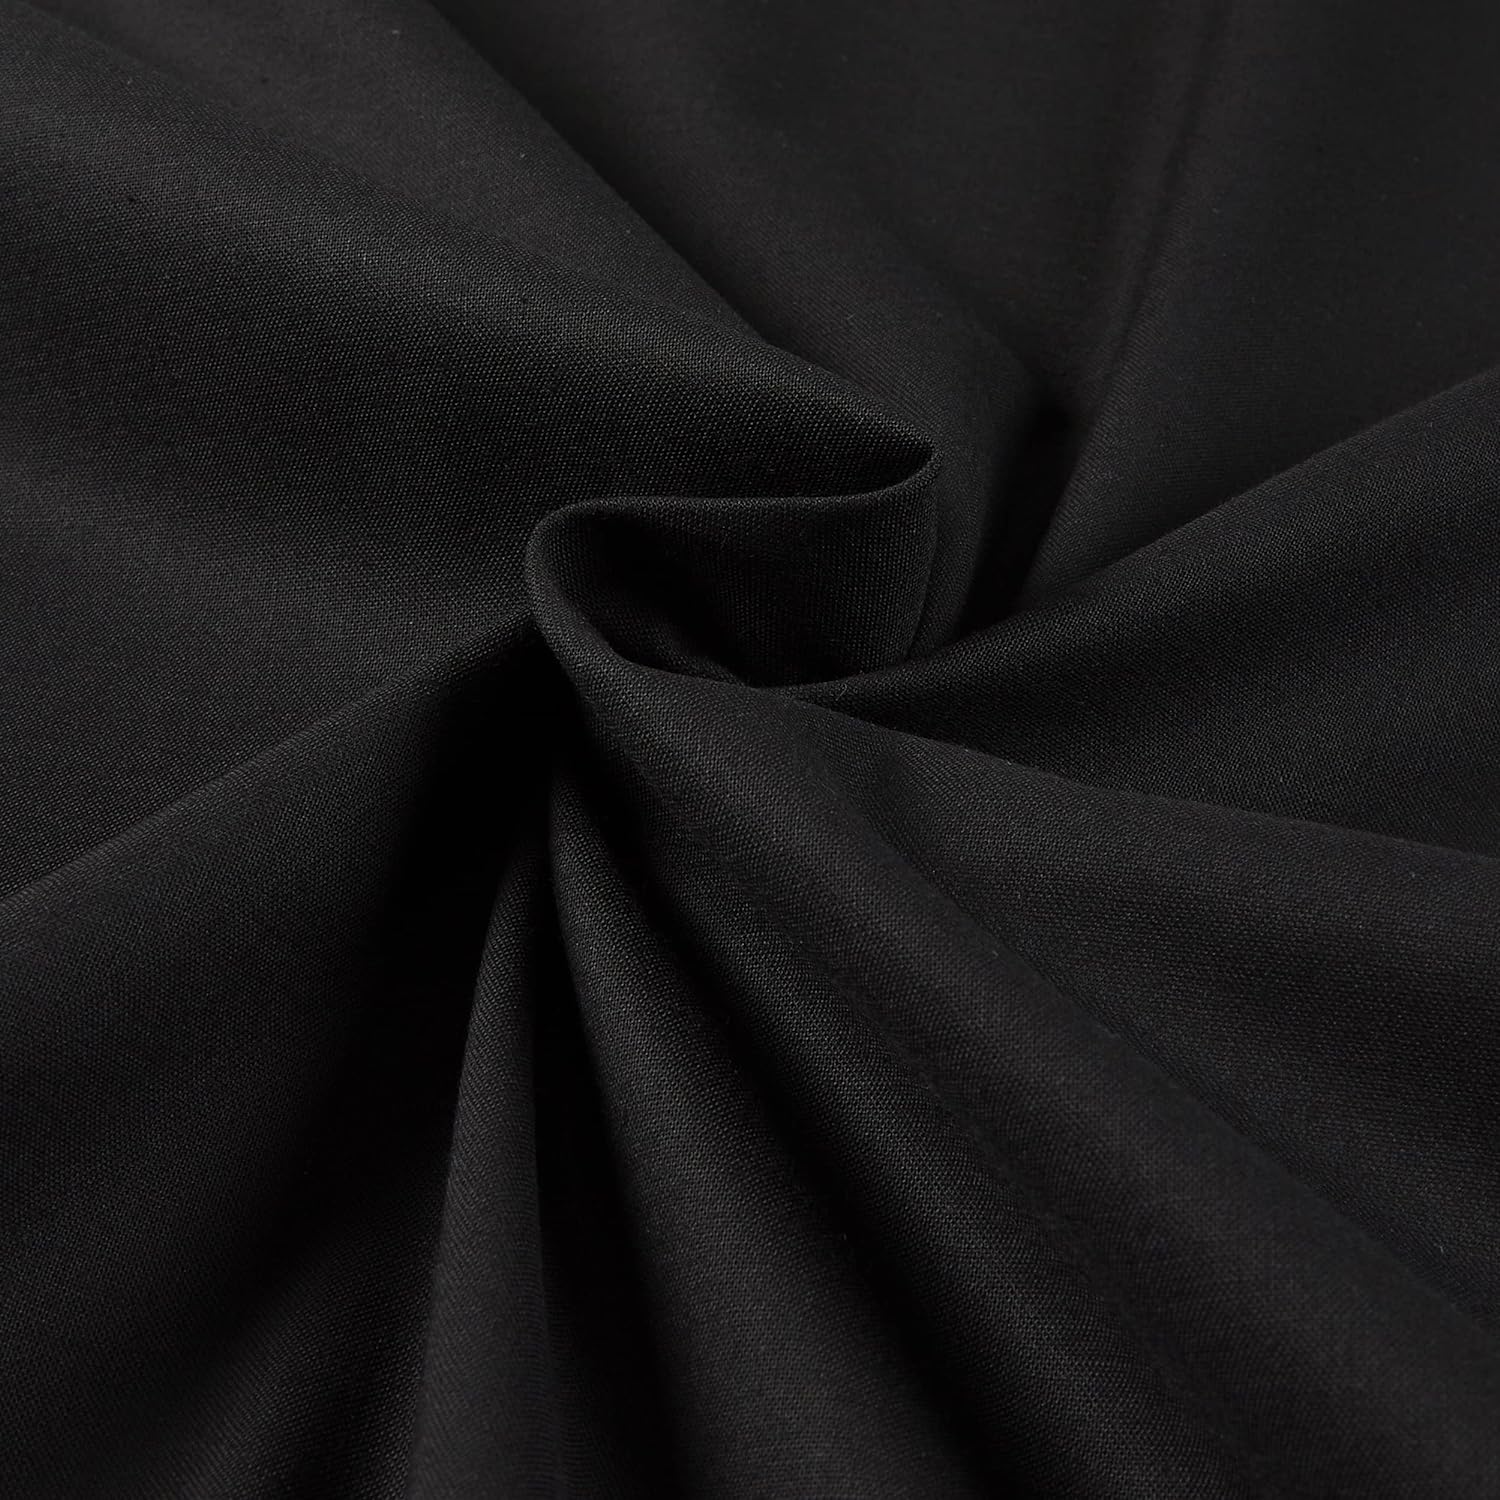 45" Black Muslin Fabric Per Yard - 100% Cotton